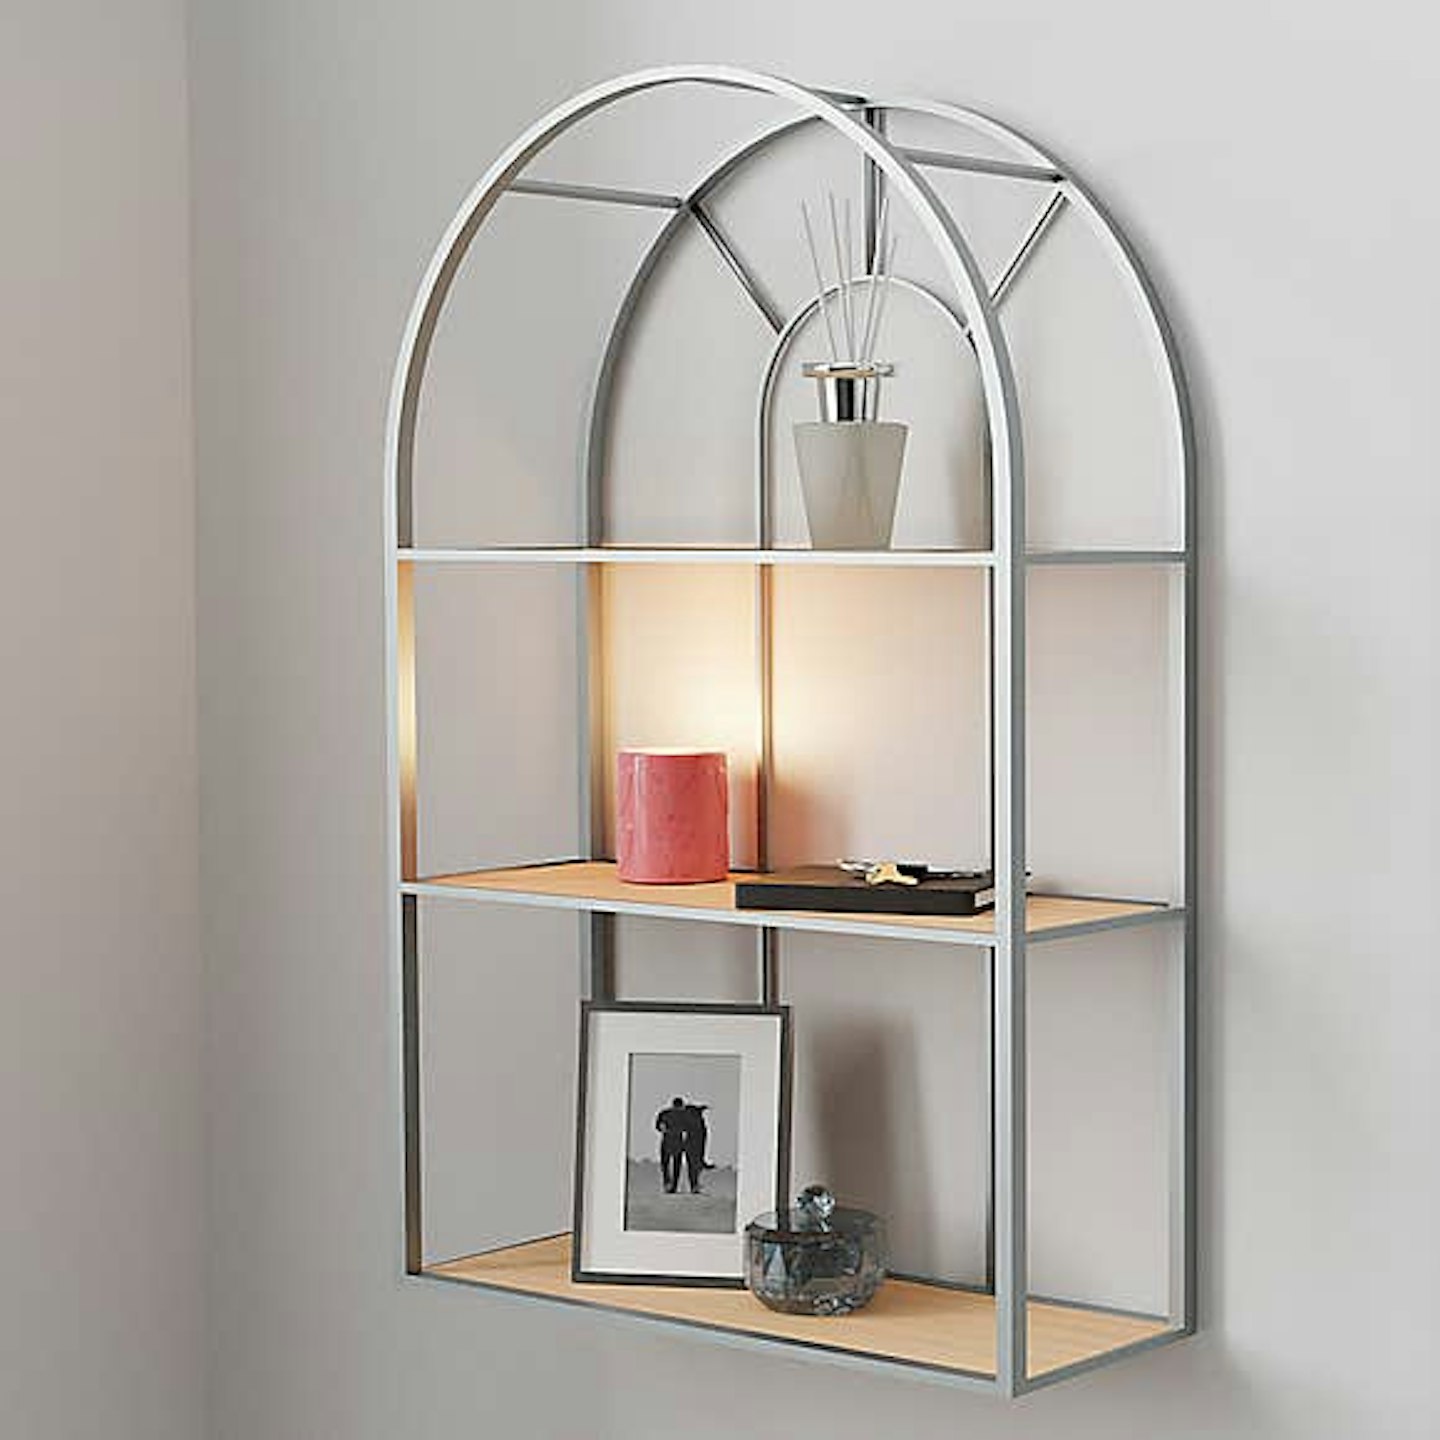 Window shaped shelf